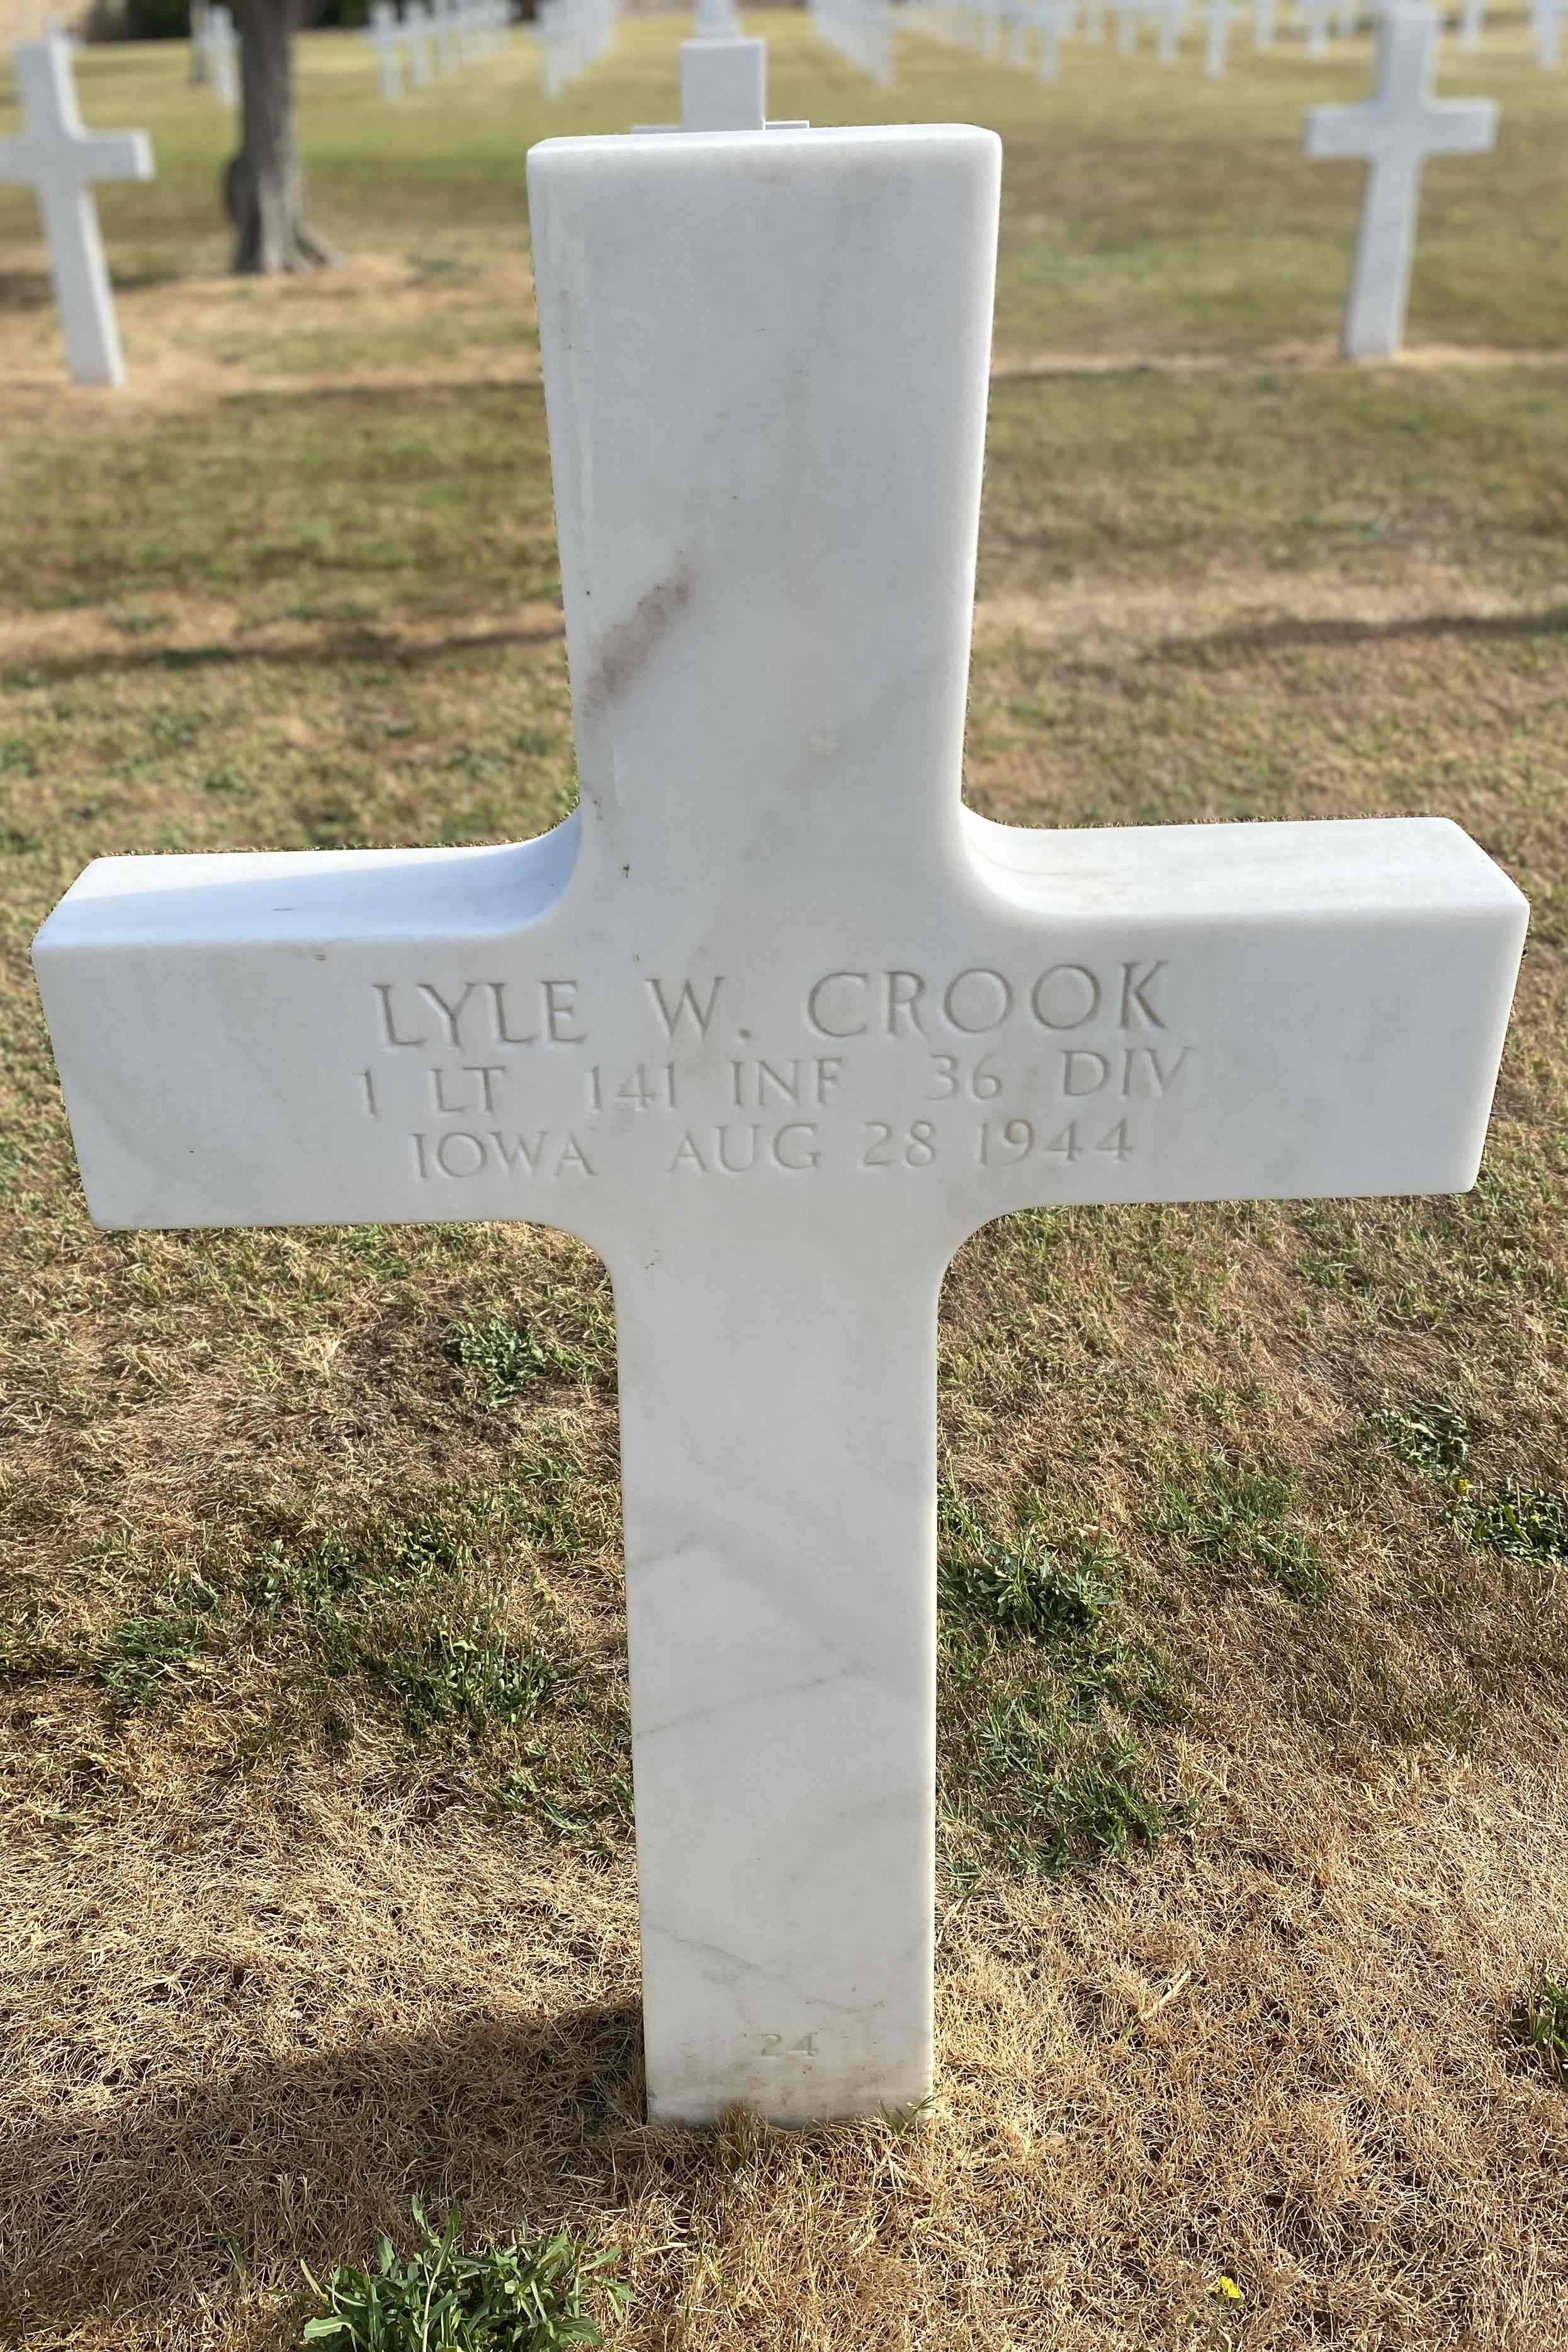 Lyle_W_Crook_grave.JPG